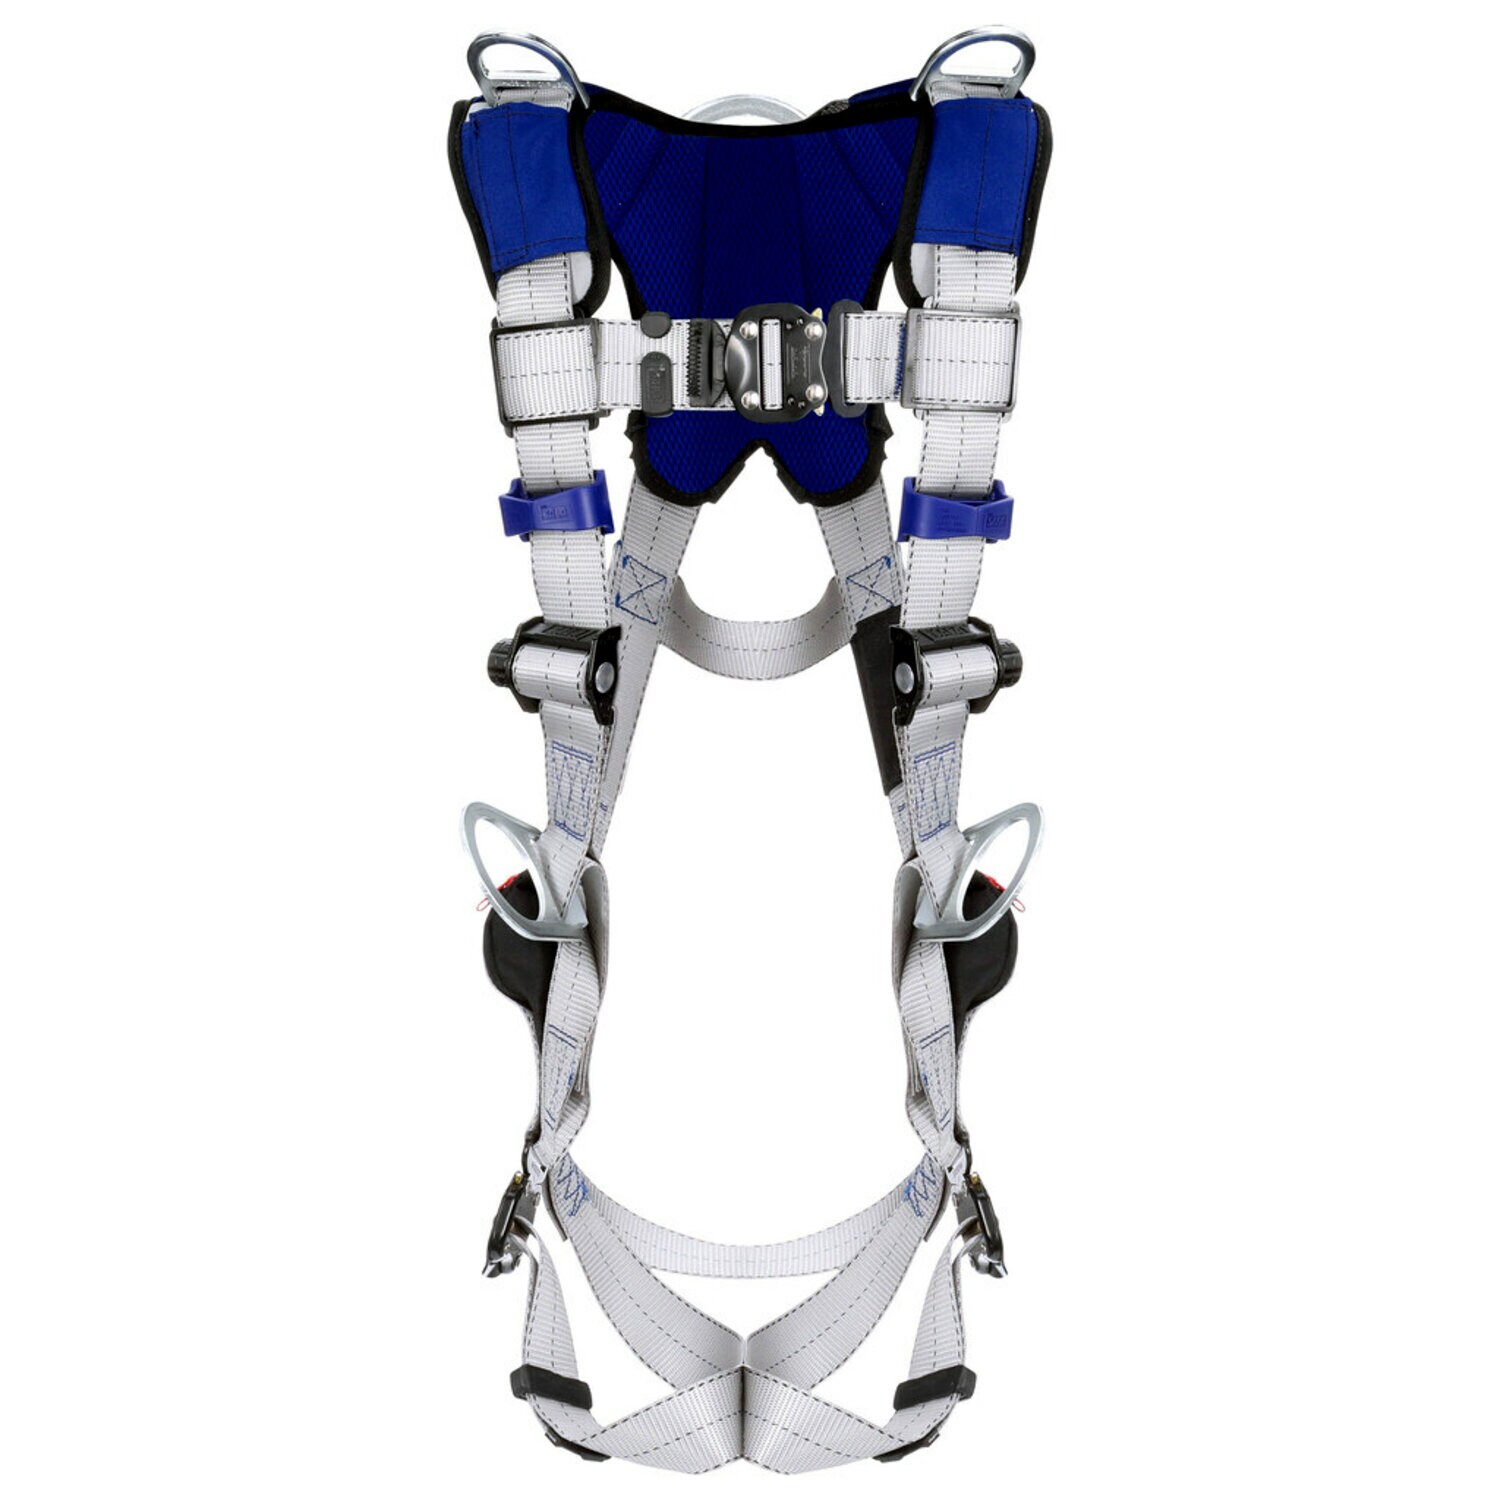 7012817706 - 3M DBI-SALA ExoFit X100 Comfort Vest Positoning/Retrieval Safety Harness 1401225, X-Large